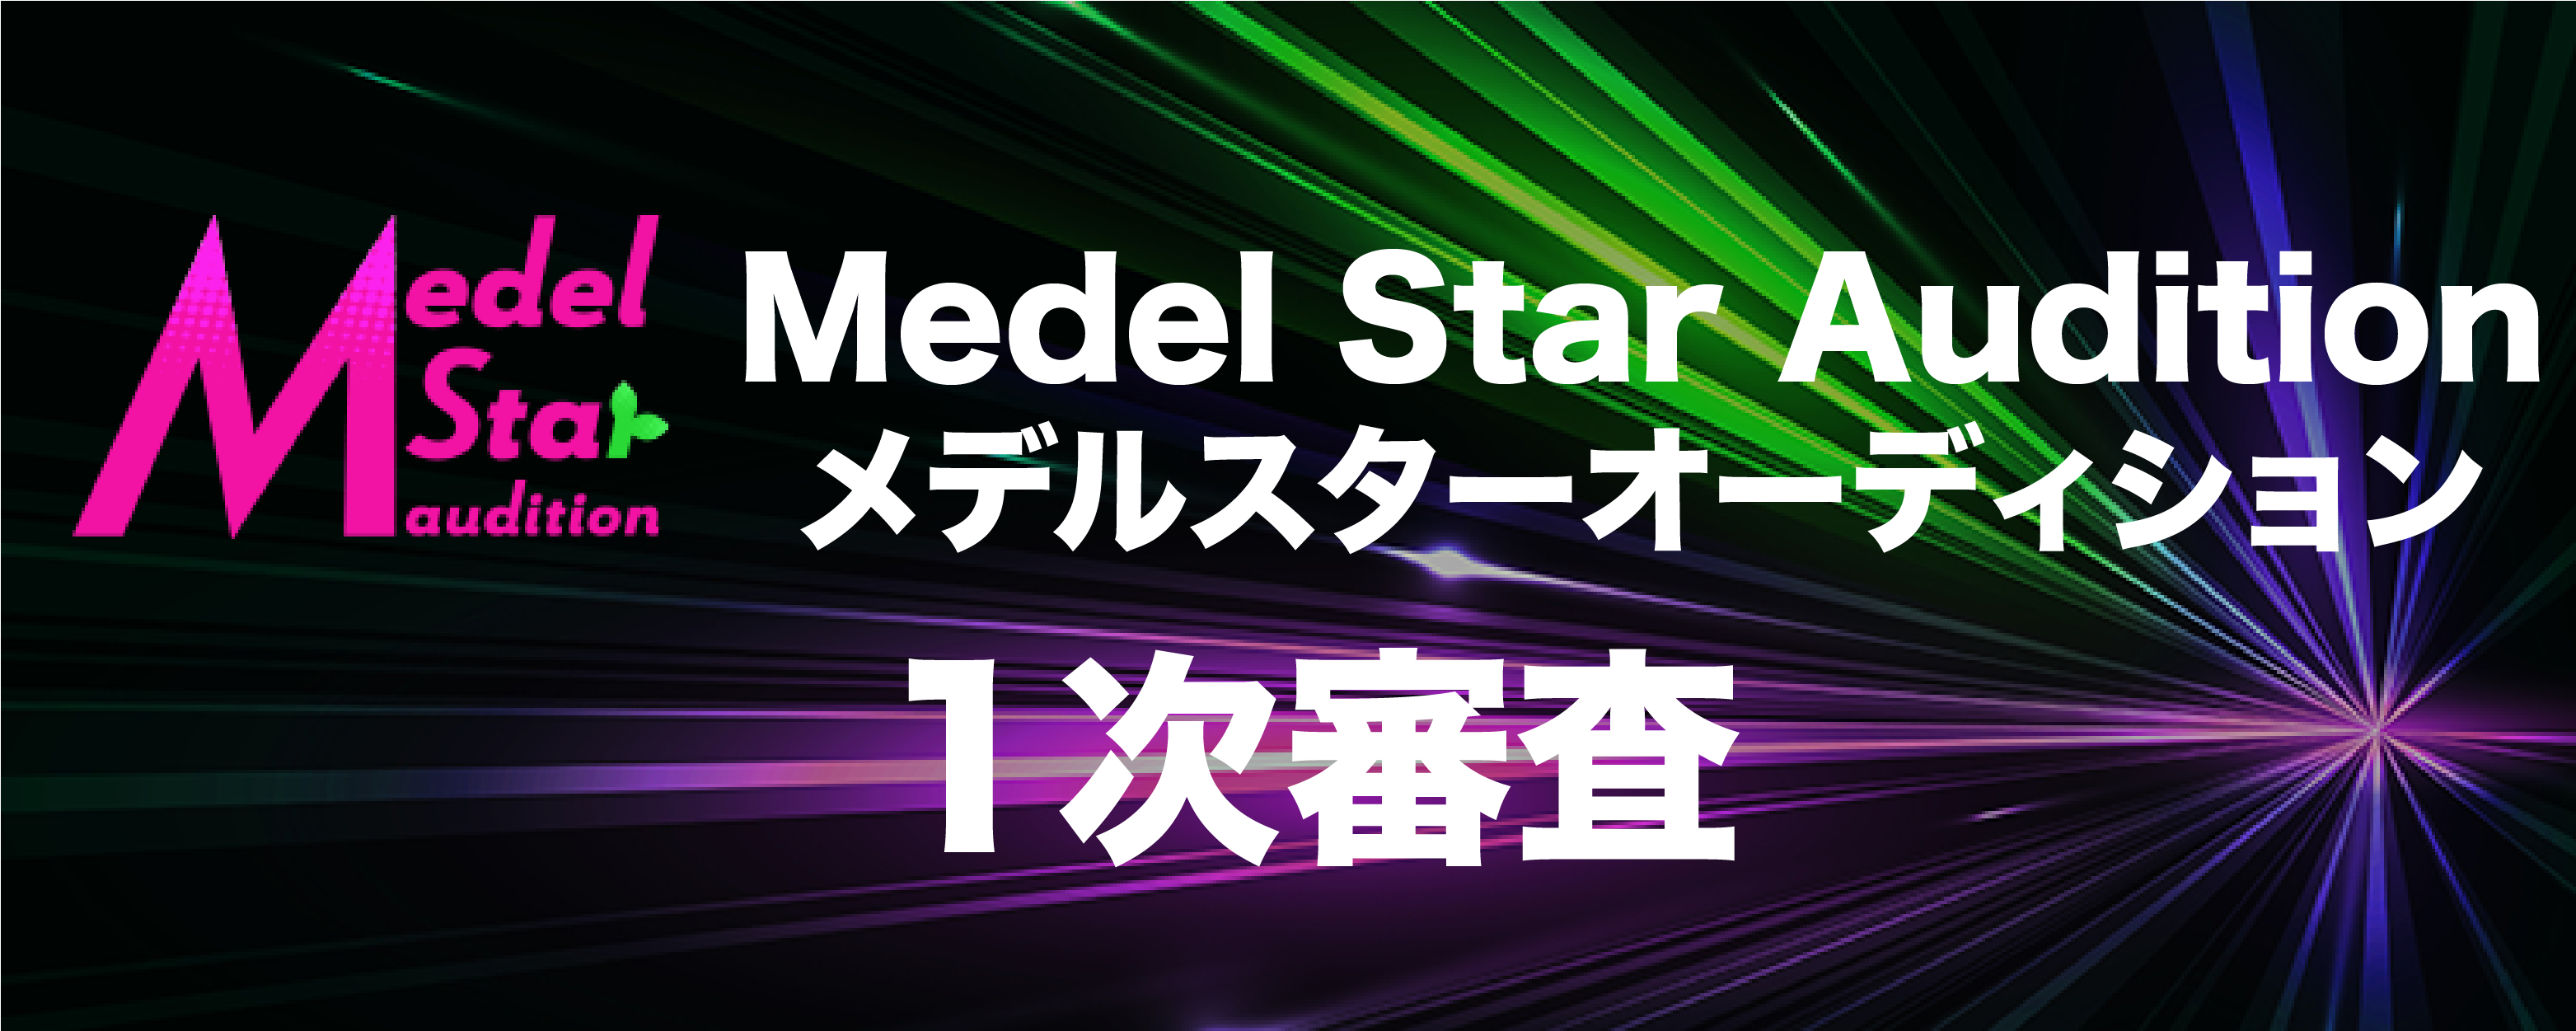 【Medel Star Audition】1次審査